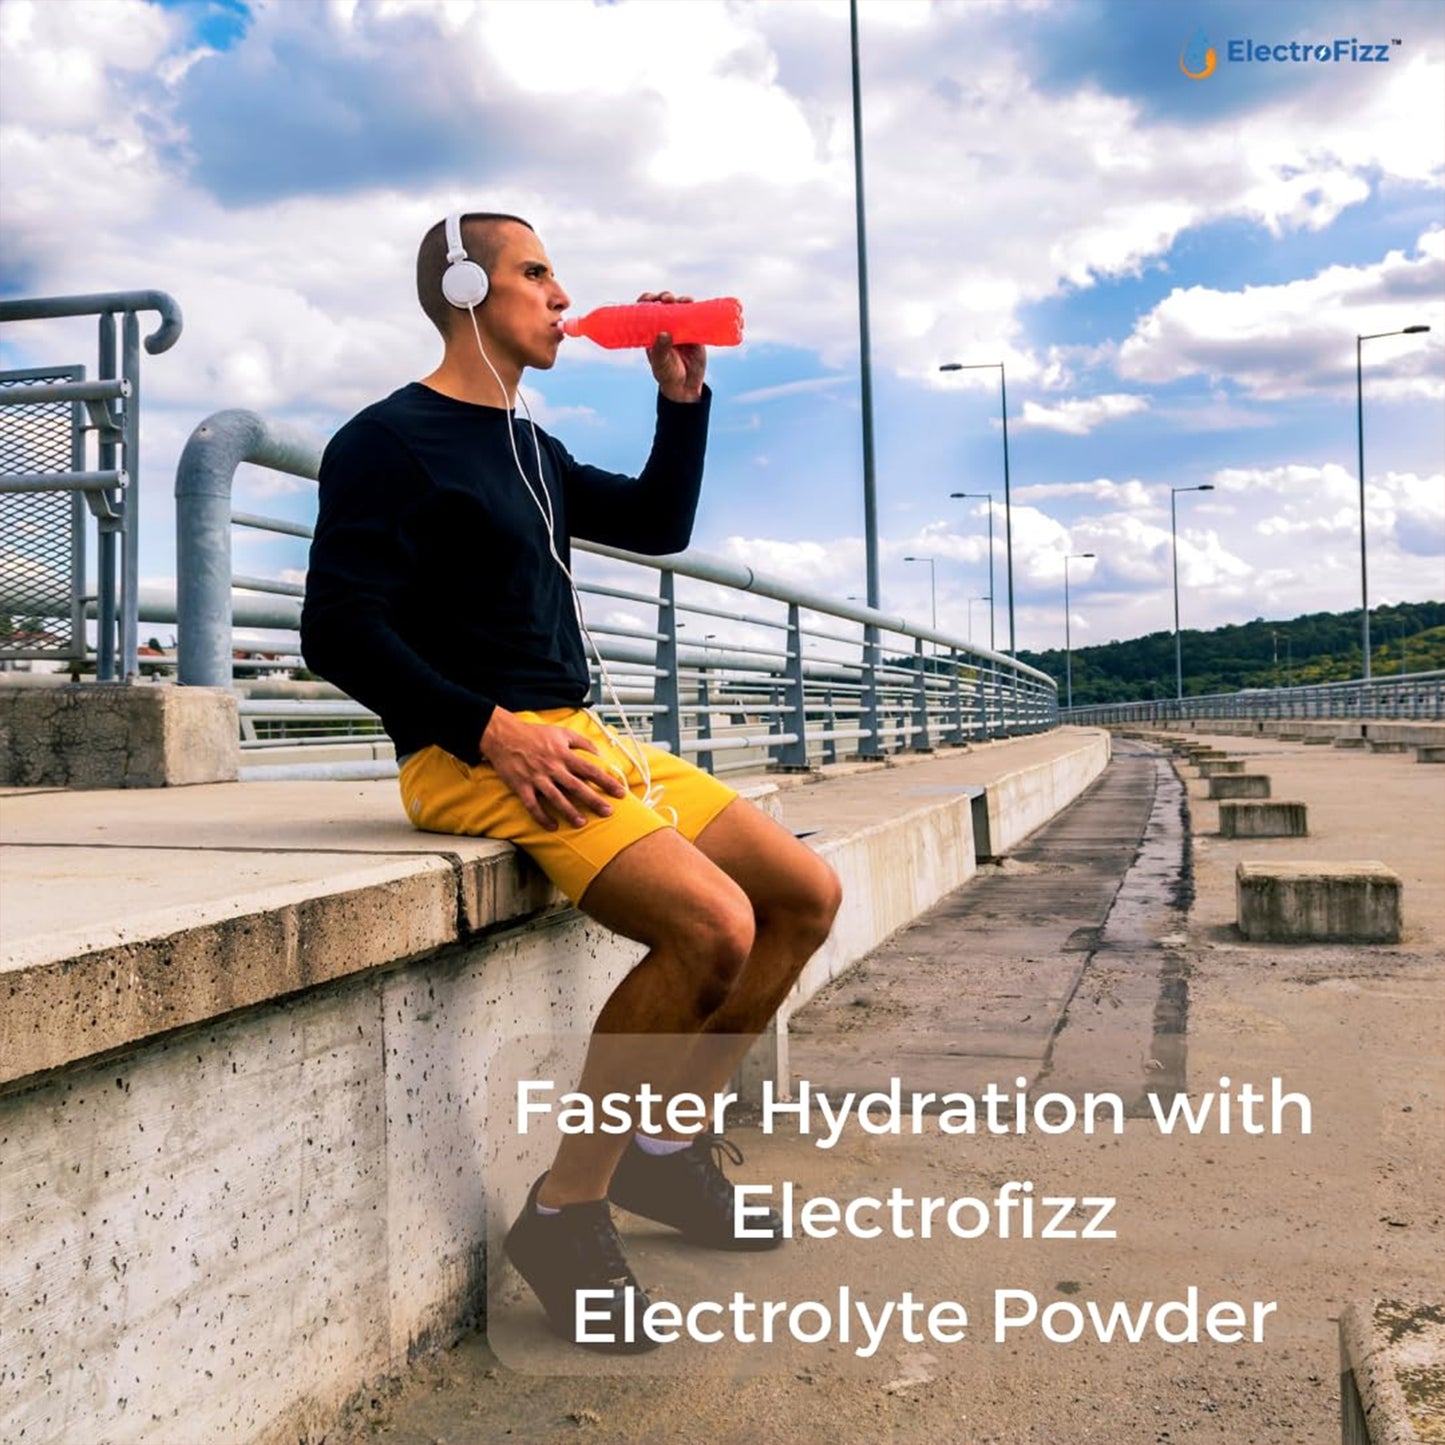 ElectroFizz Instant Hydration Energy Drink Powder Watermelon Flavour 1Kg